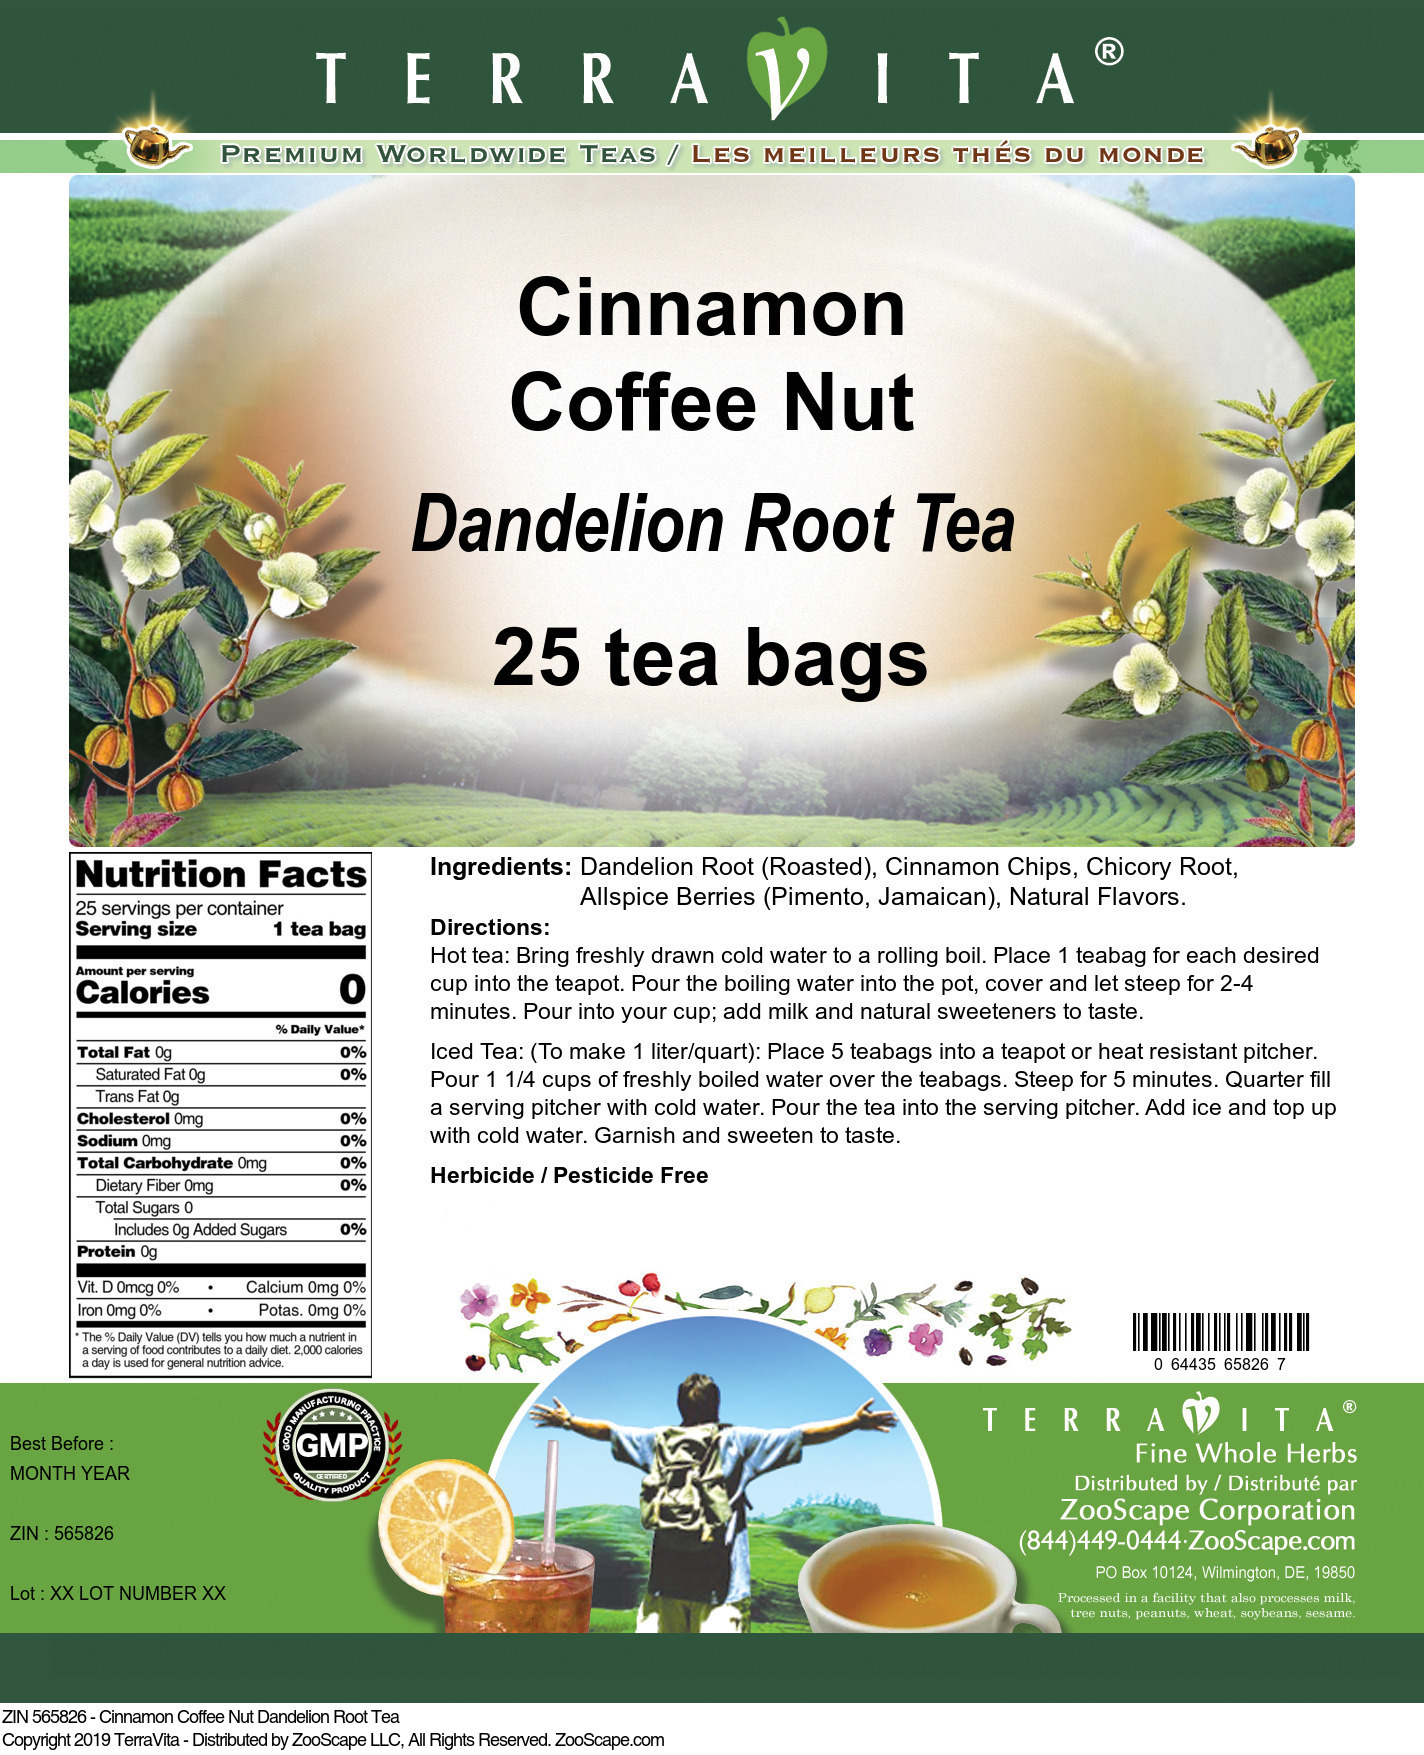 Cinnamon Coffee Nut Dandelion Root Tea - Label